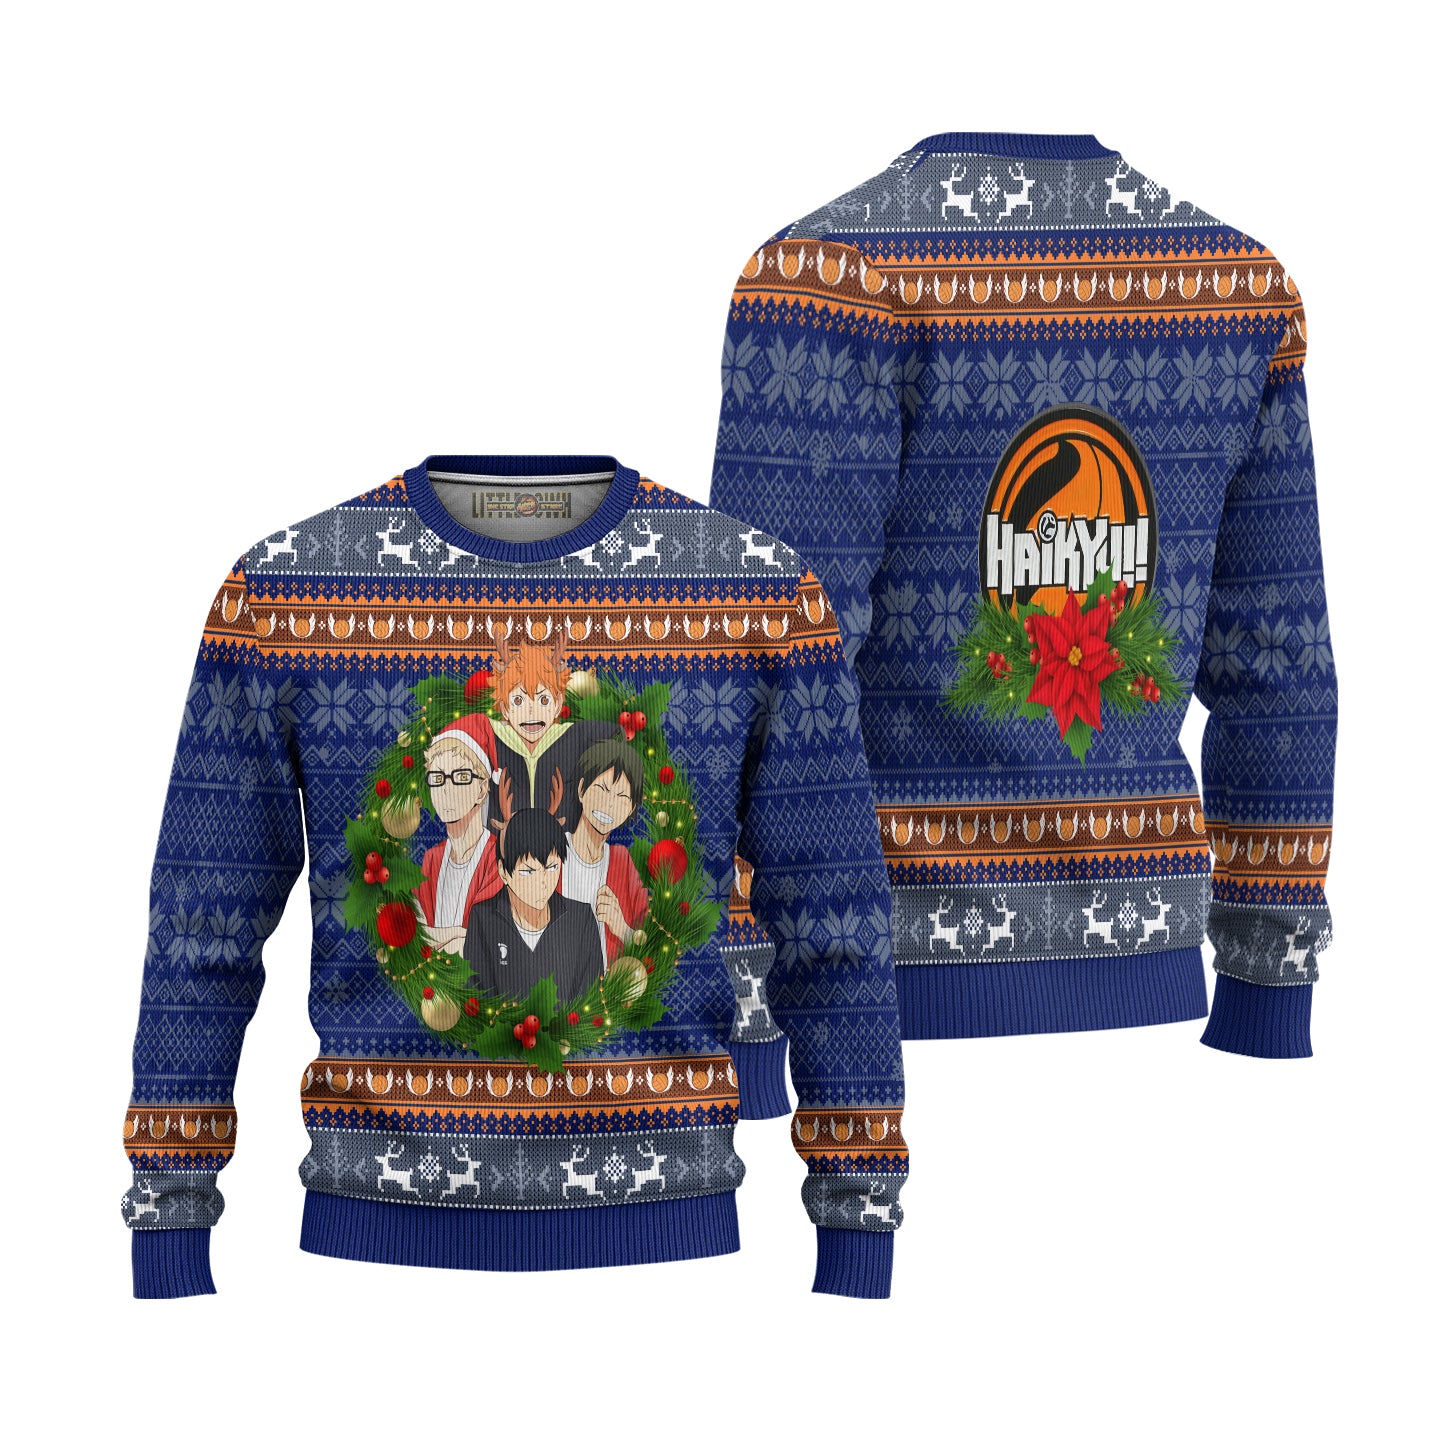 Haikyuu Ugly Christmas Sweater Anime New Design